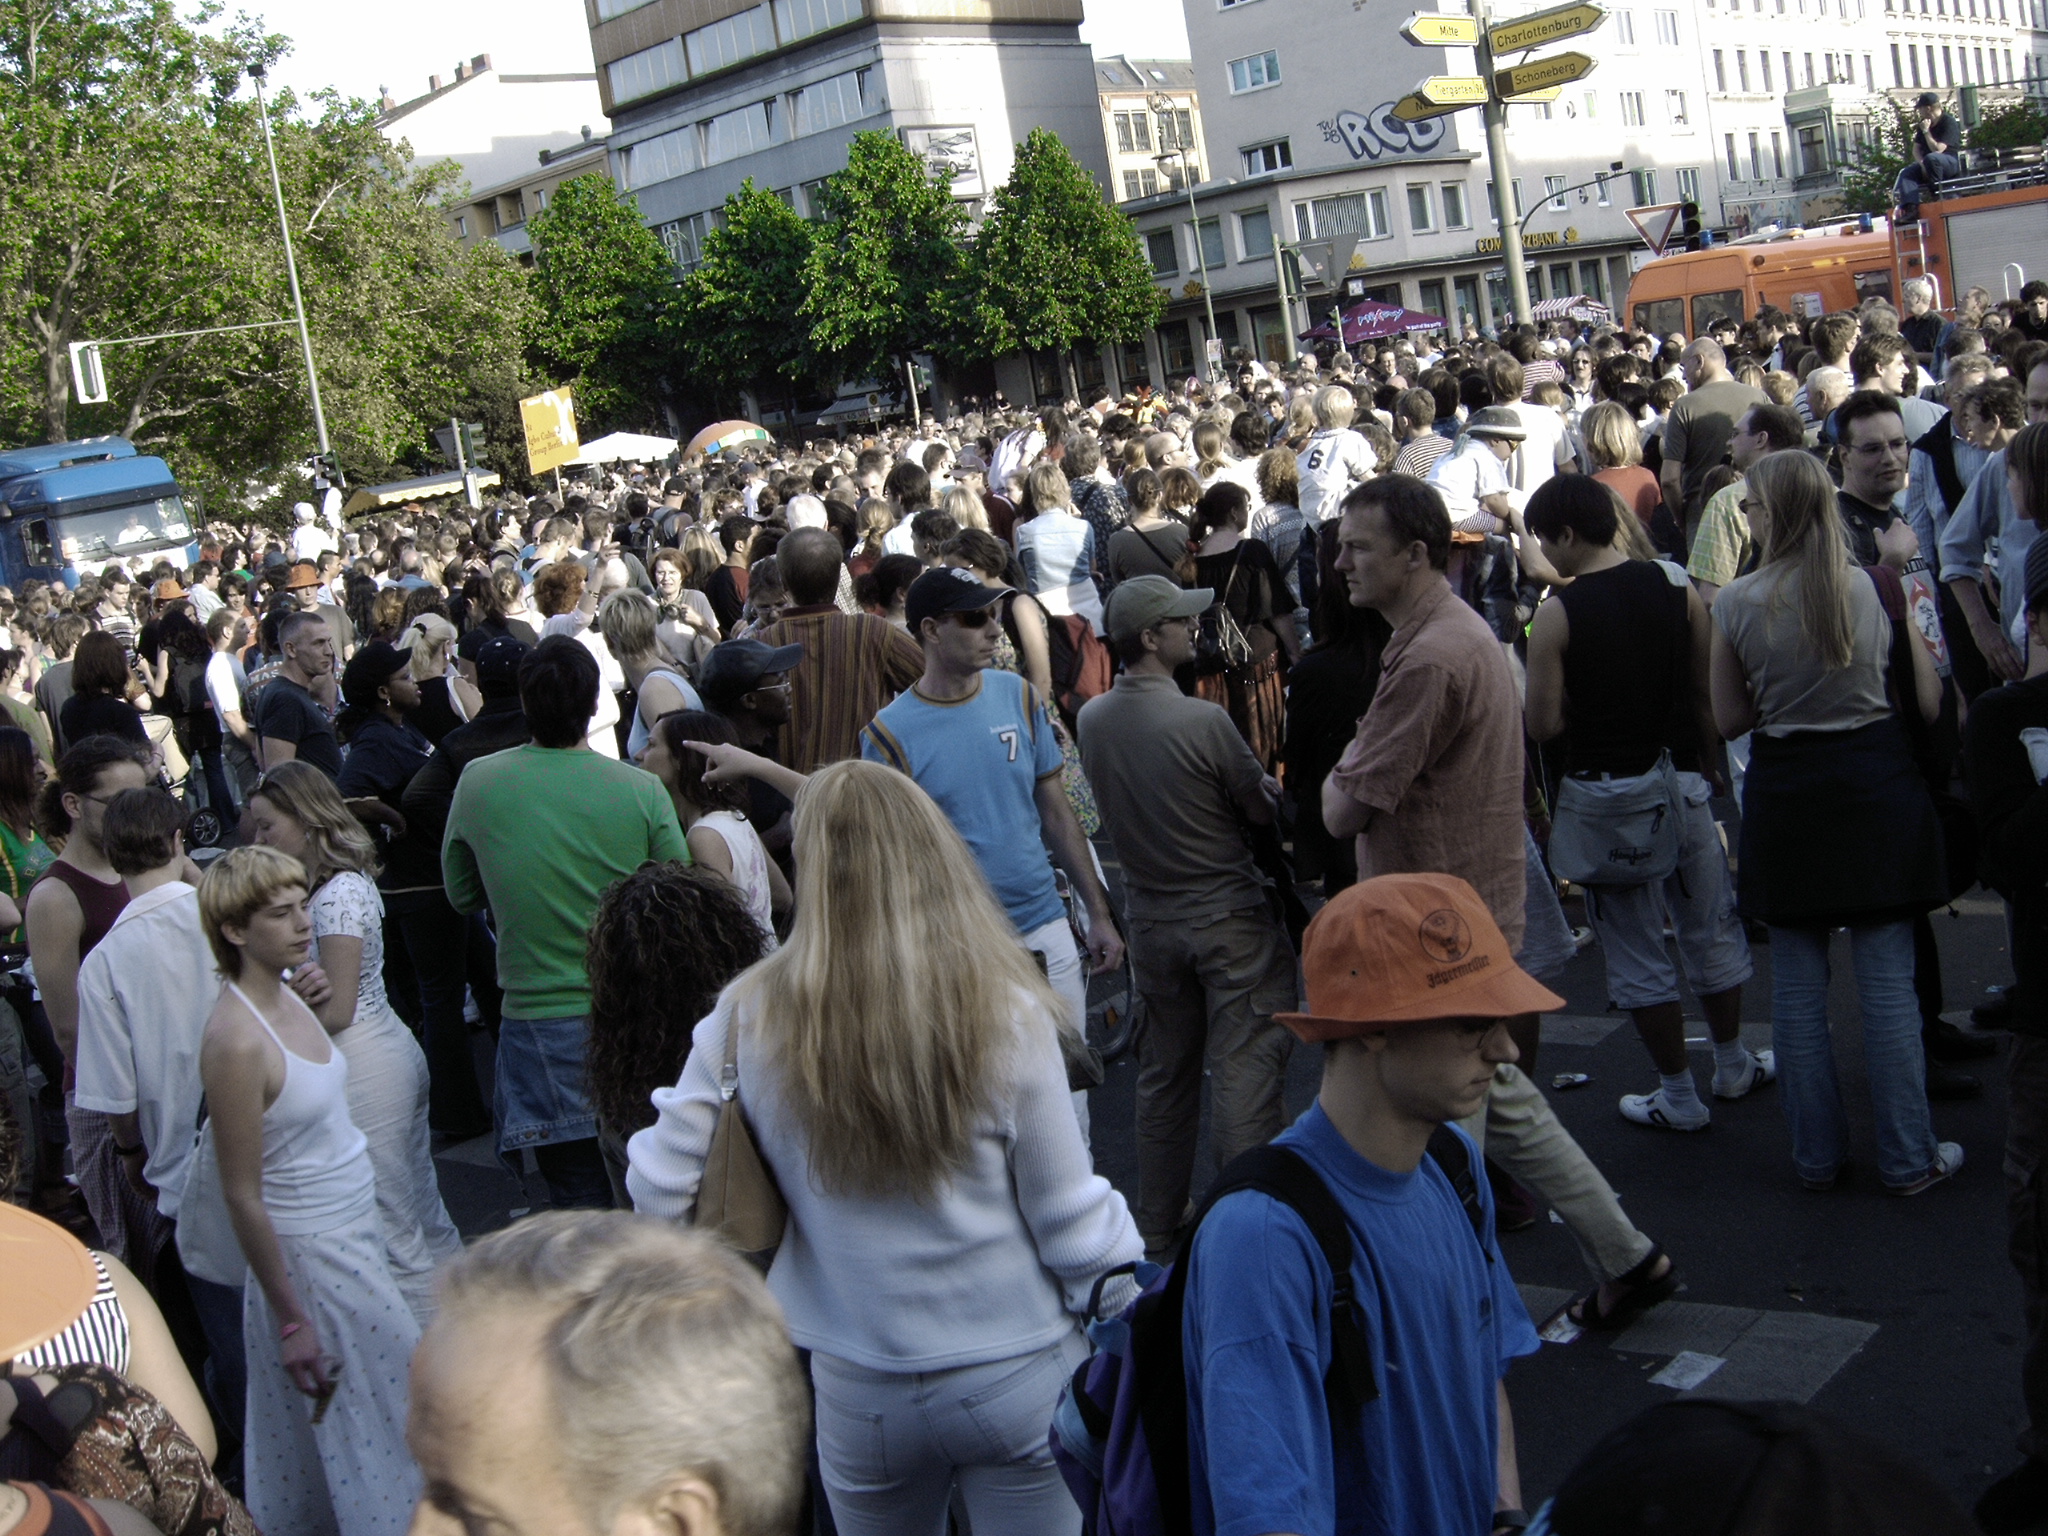 Photo vom Karneval der Kulturen am  30. Mai 2004 in Kreuzberg in Berlin (Germany). Copyright by Kim Hartley.